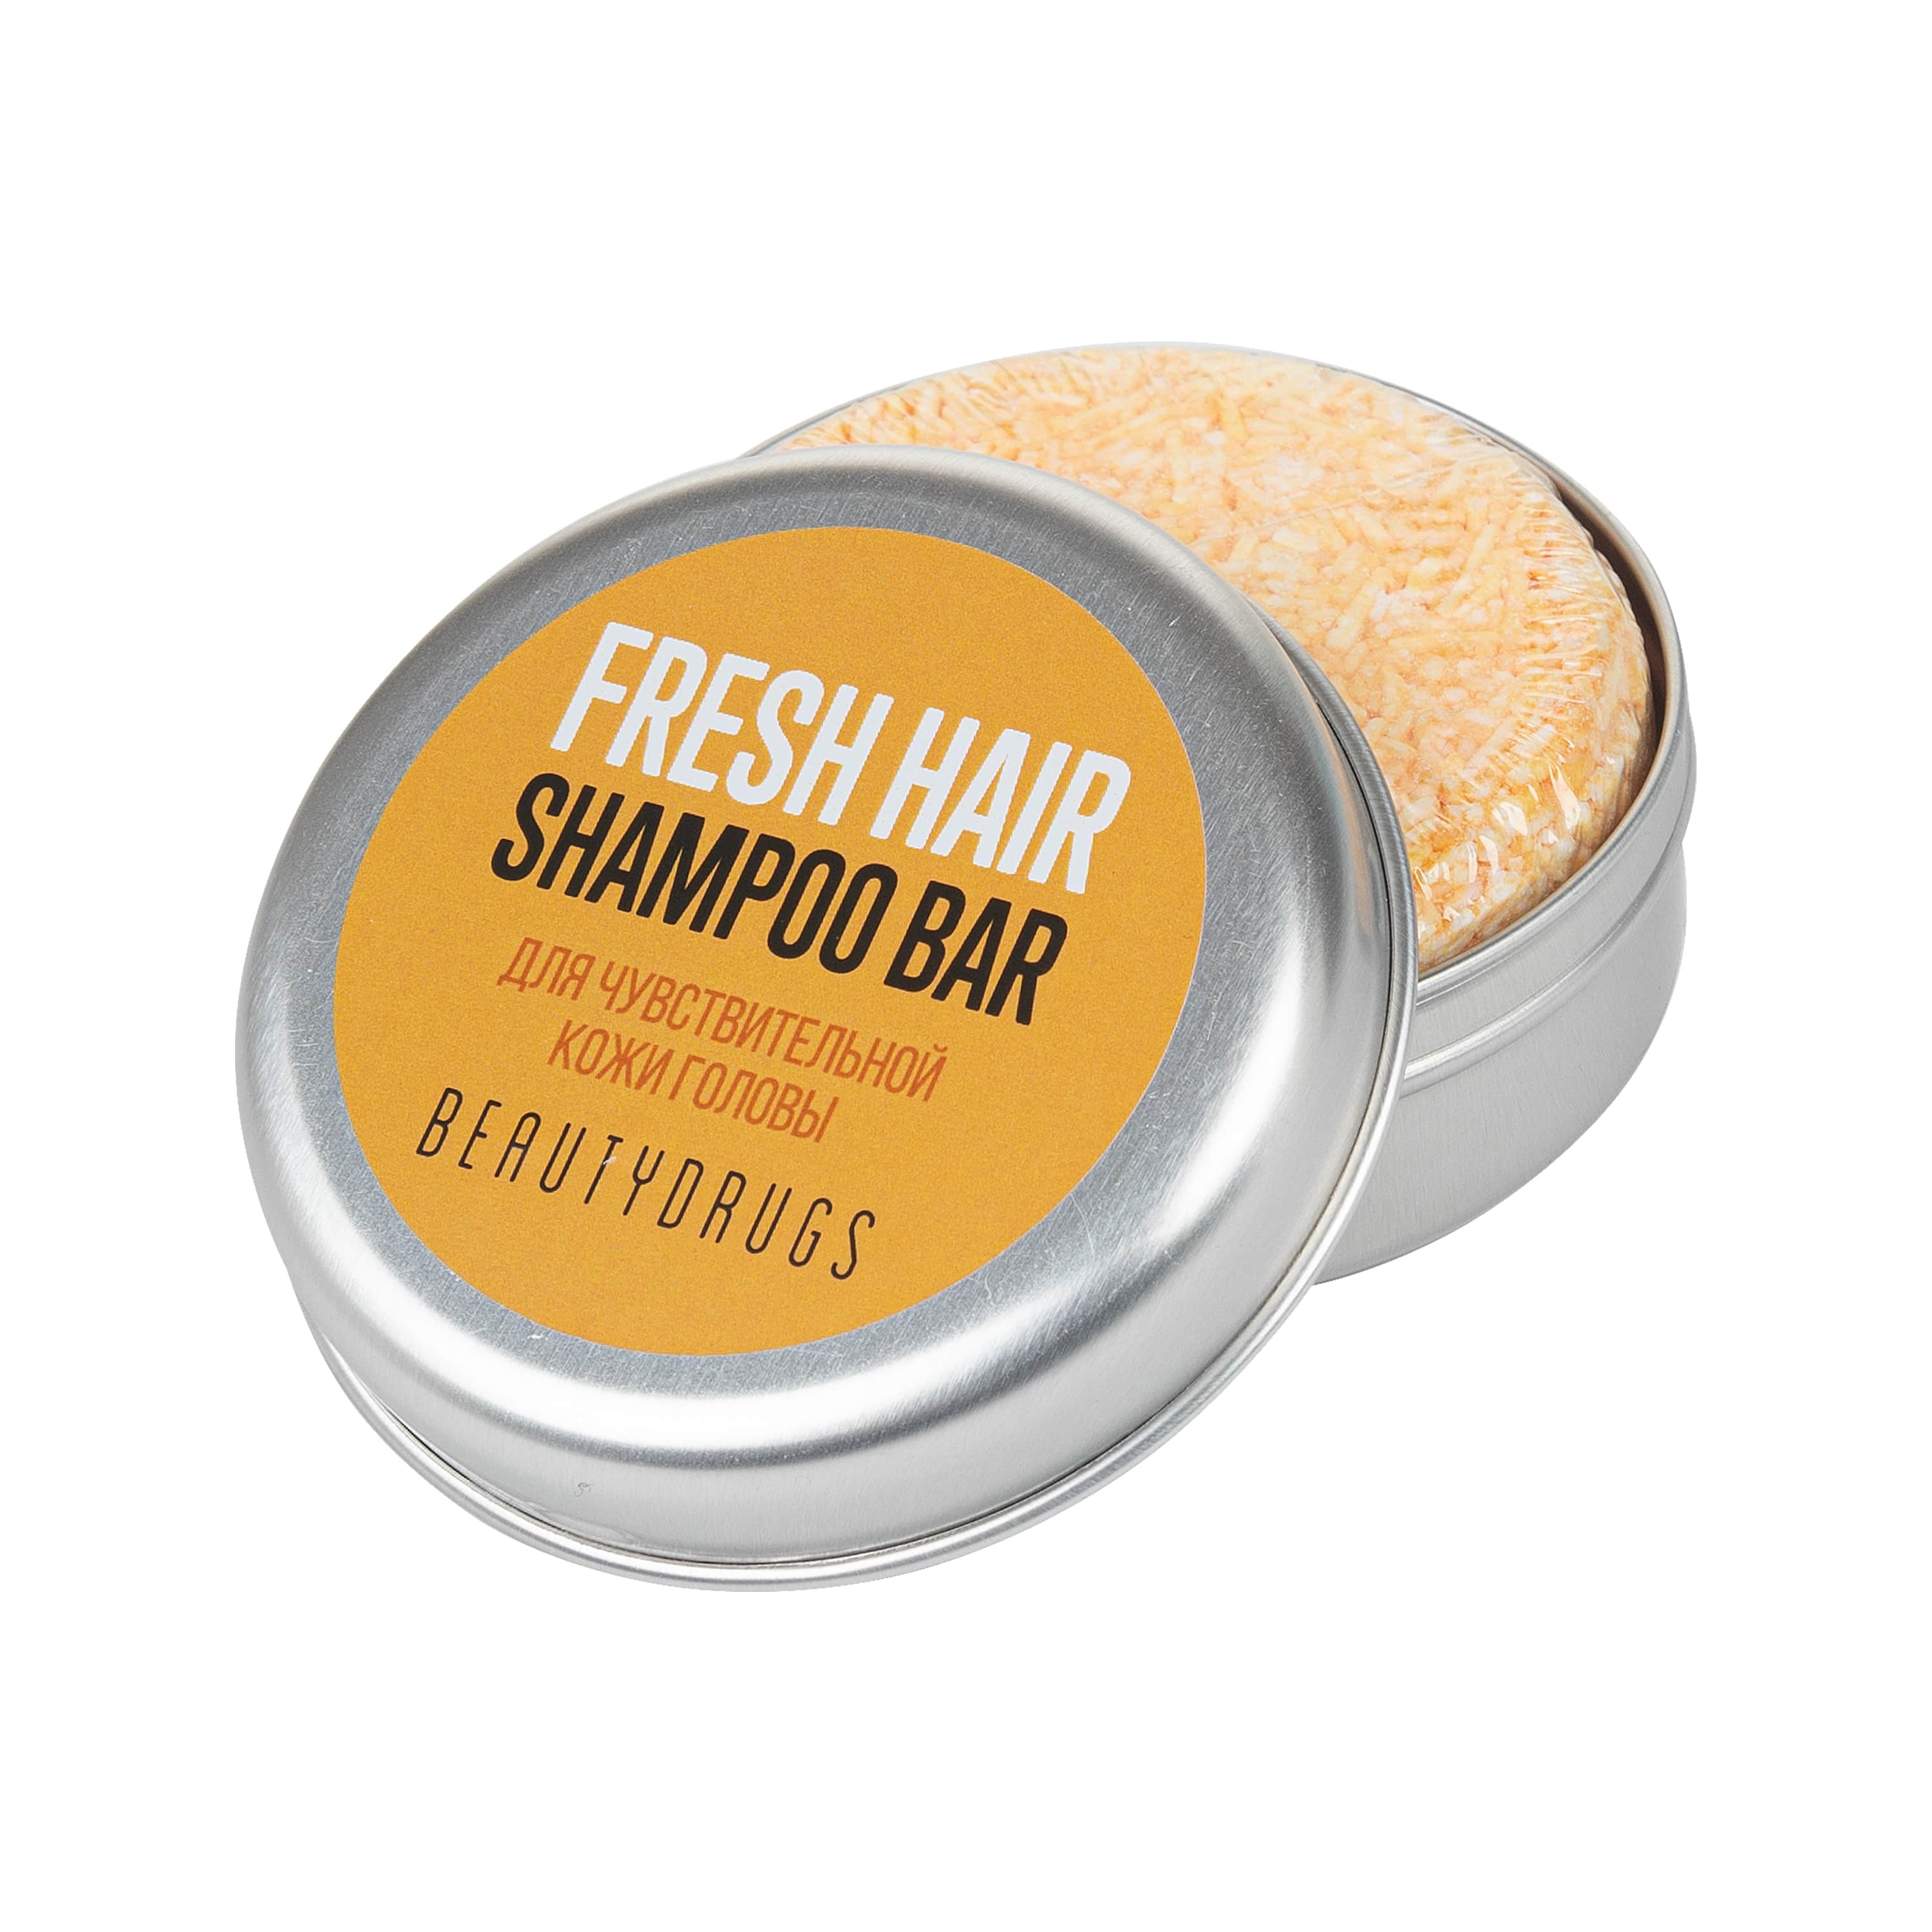 Beautudrugs Fresh Hair Shampoo Bar  - Твердый шампунь для чувствительной кожи головы